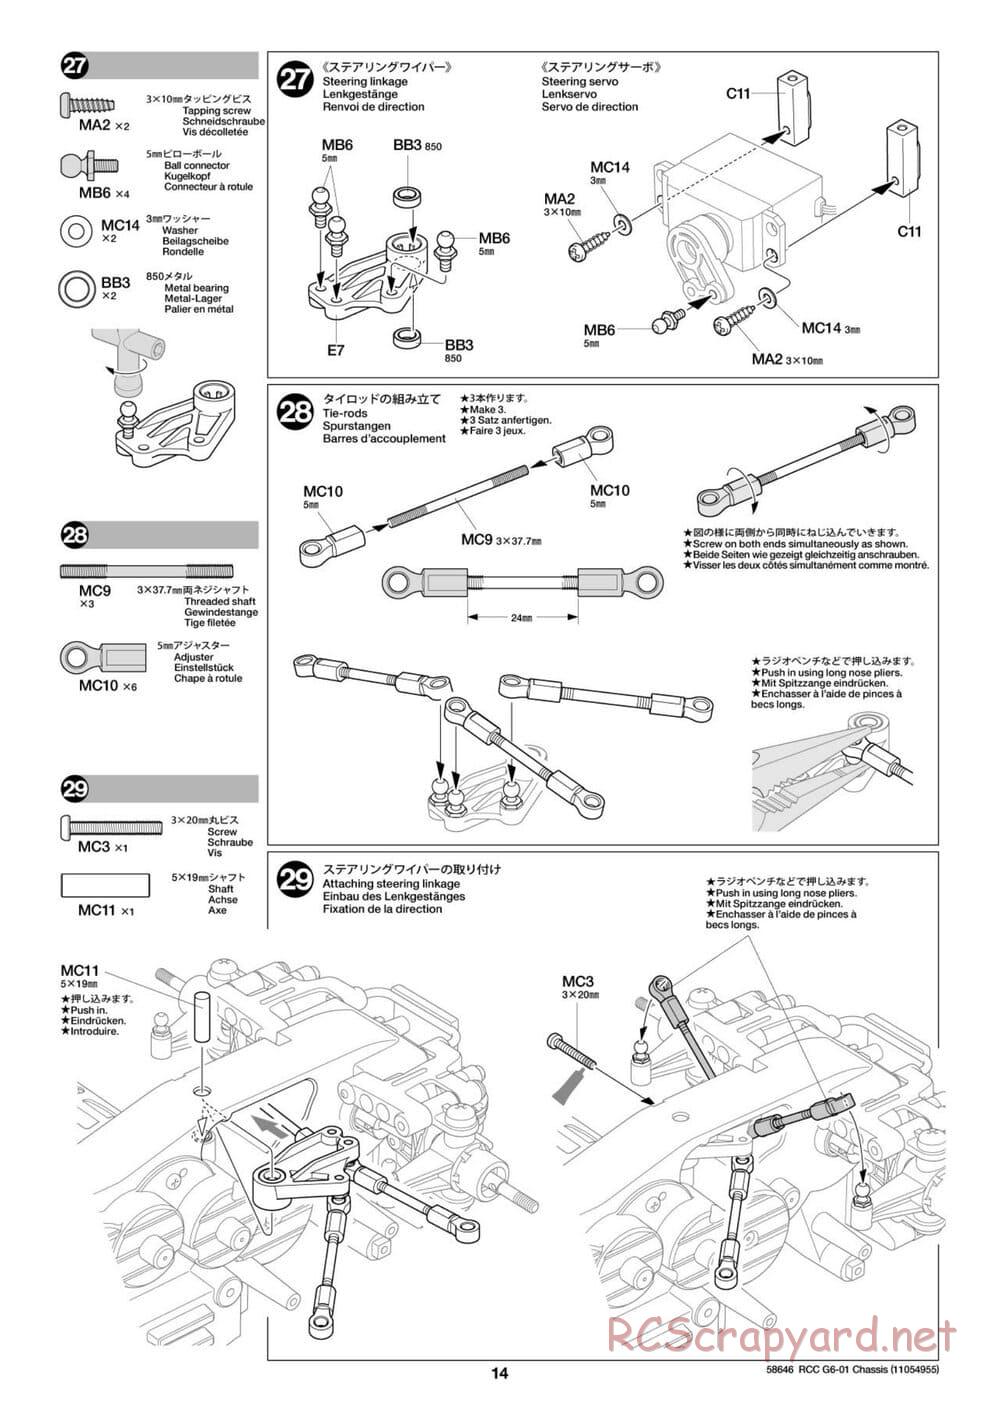 Tamiya - Konghead 6x6 - G6-01 Chassis - Manual - Page 14